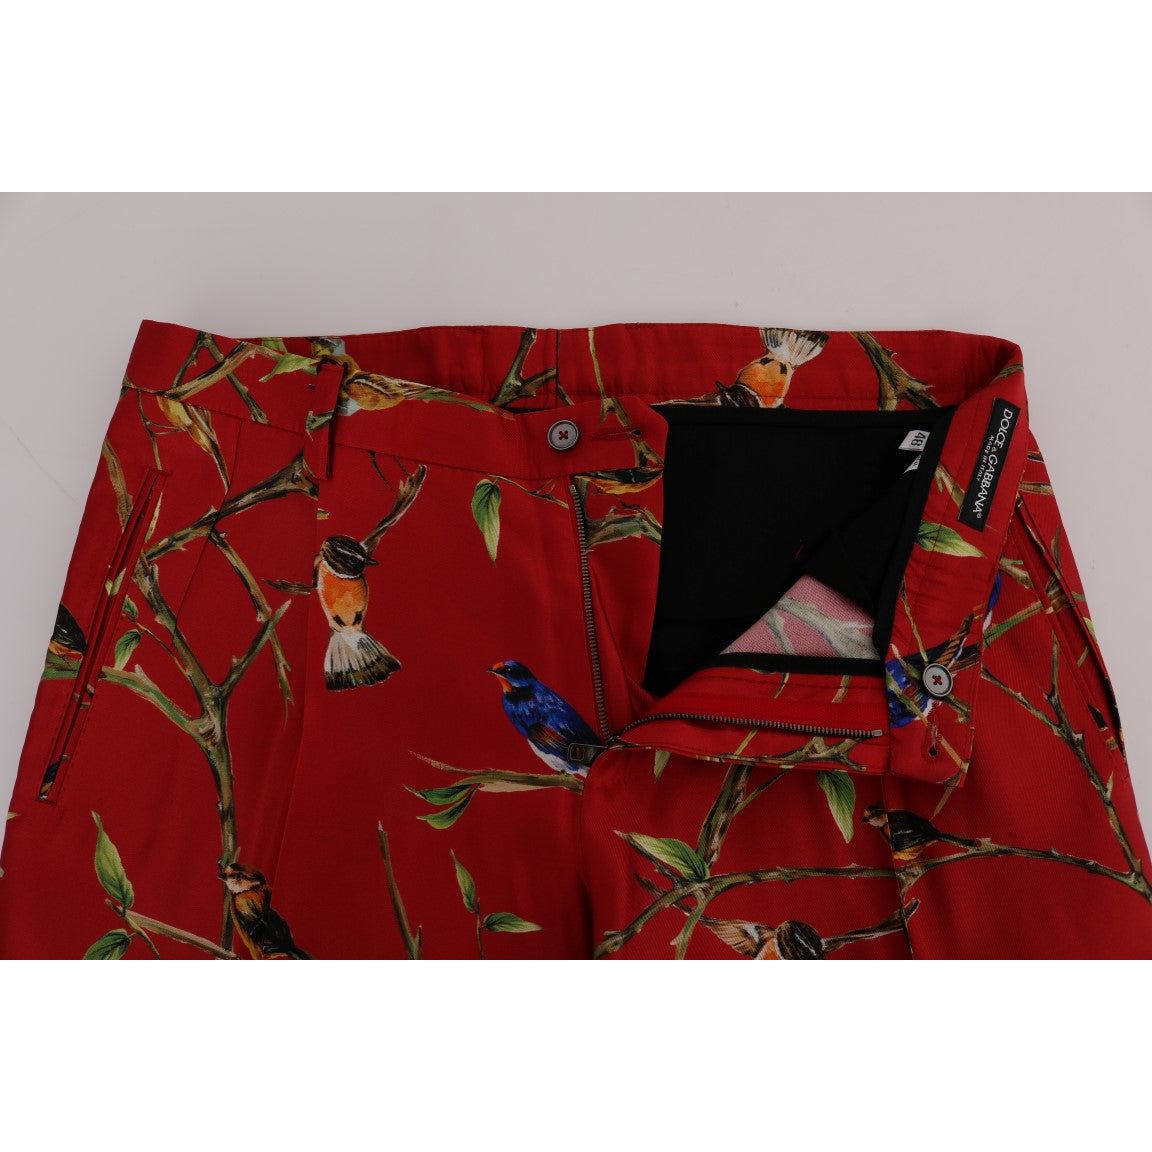 Elegant Silk Dress Trousers in Red Bird Print